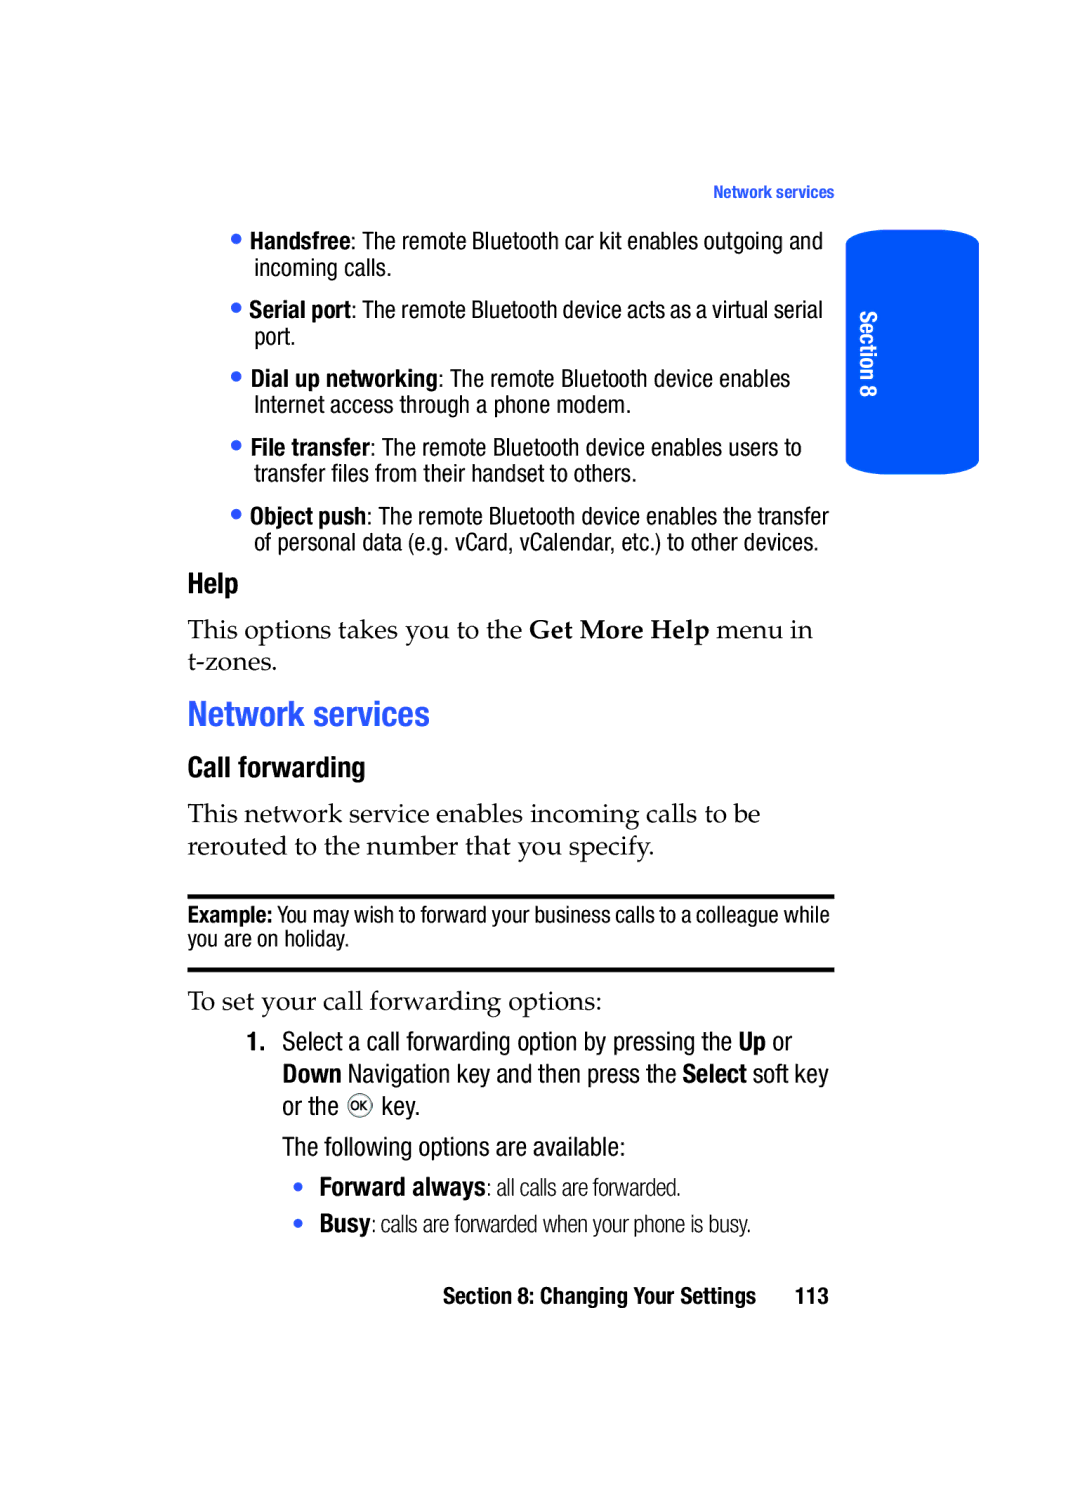 Samsung SGH-T519 manual Network services, Help, Call forwarding 